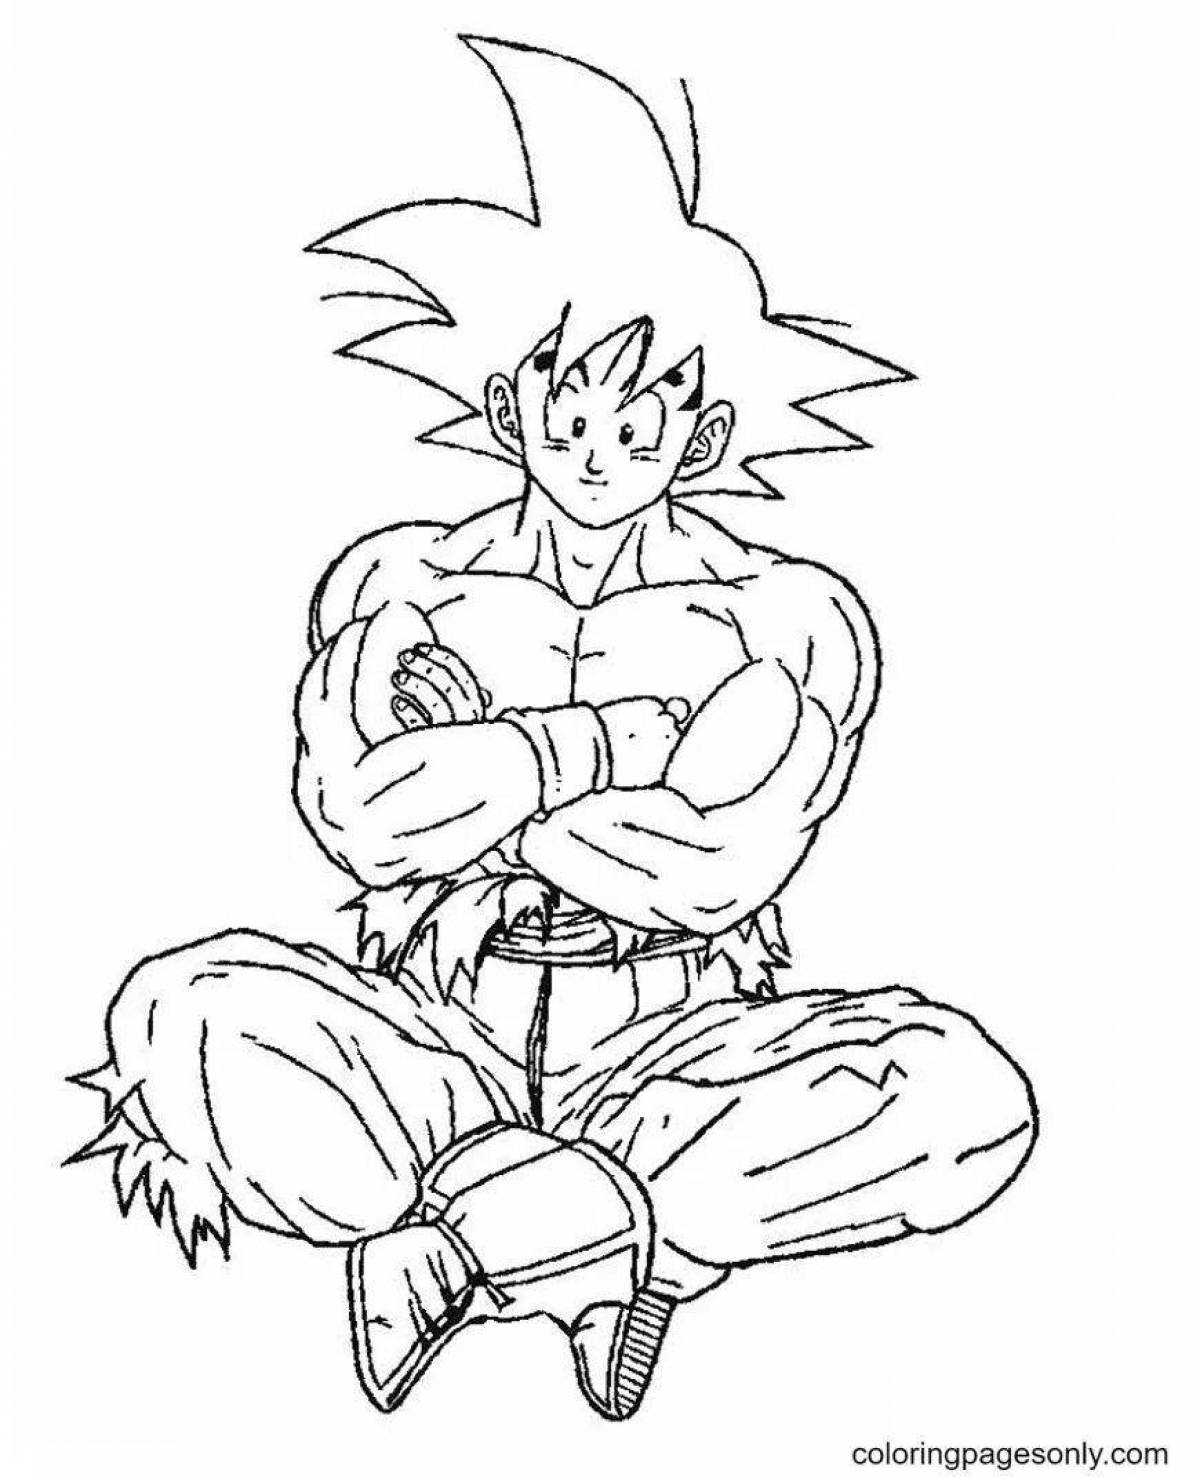 Goku live coloring page